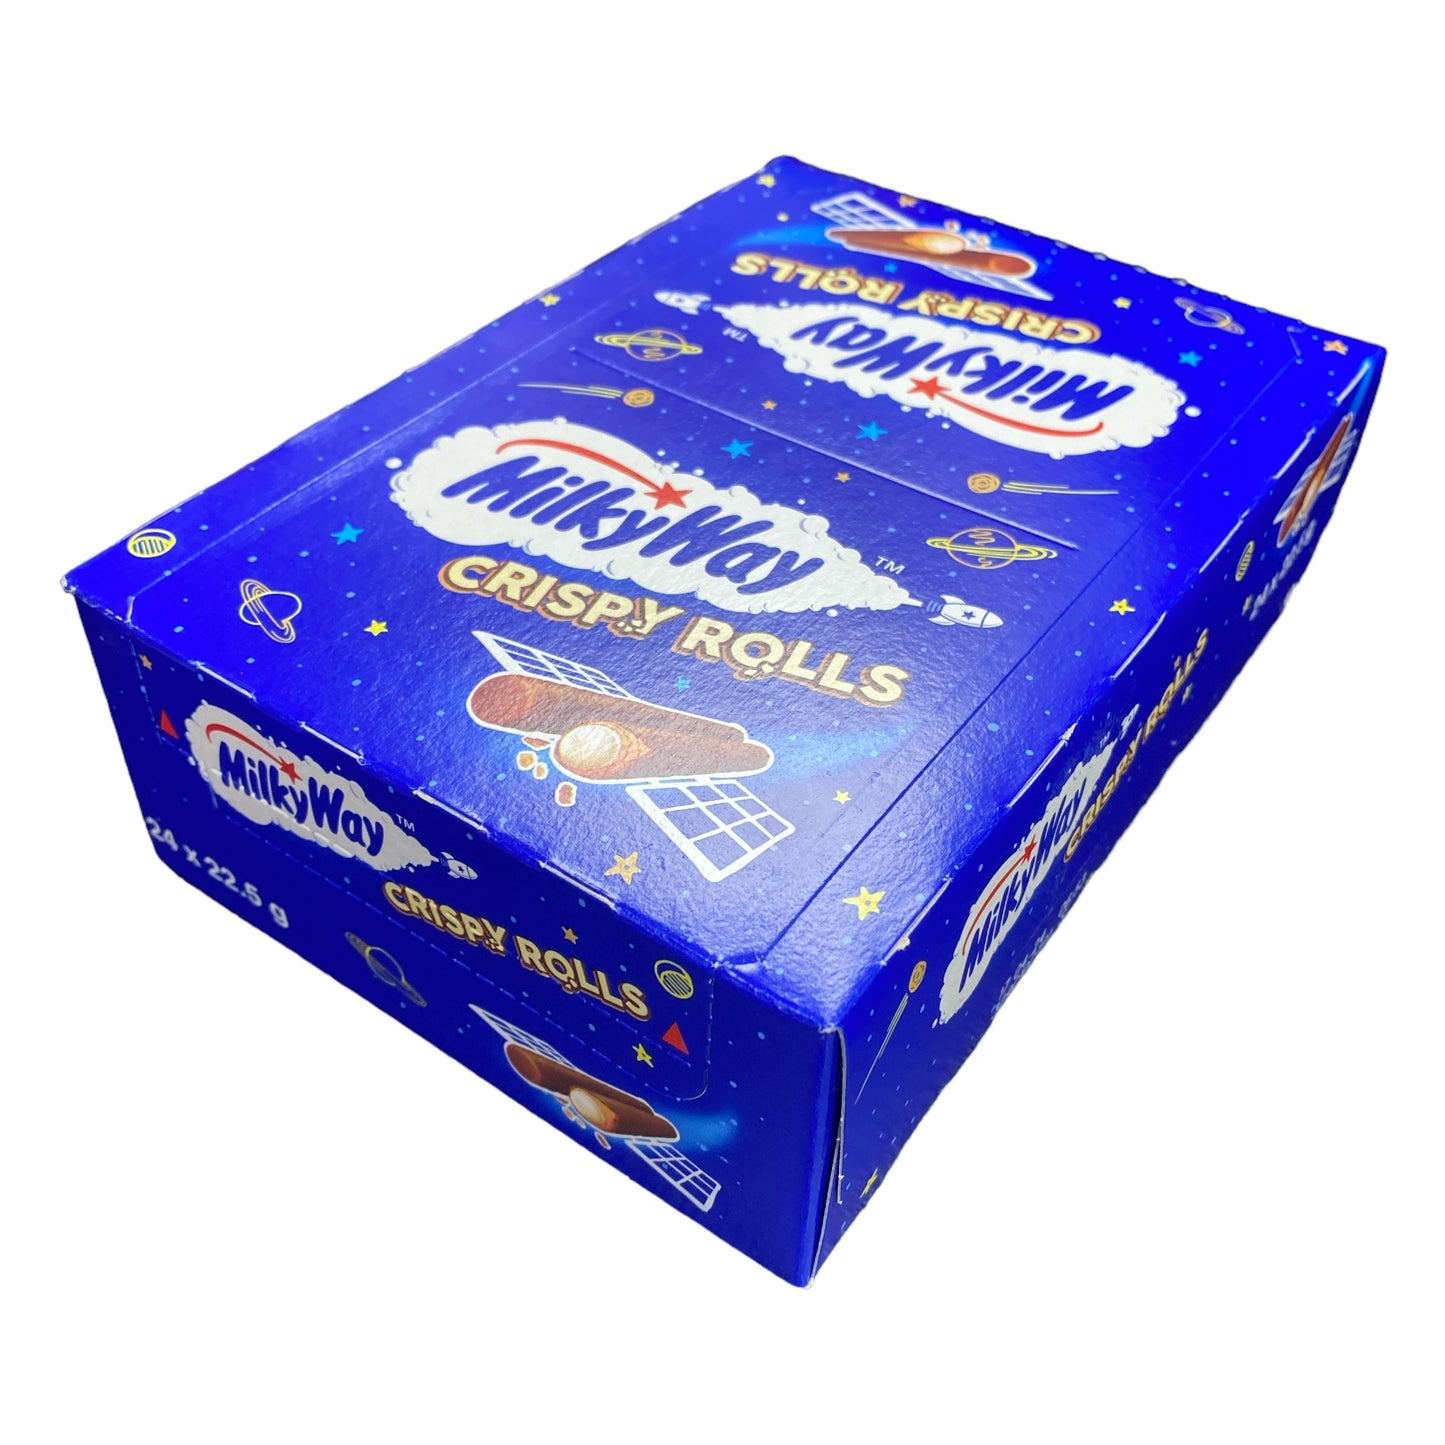 Milky Way Crispy Rolls 24 x 22.5g (Full Box)